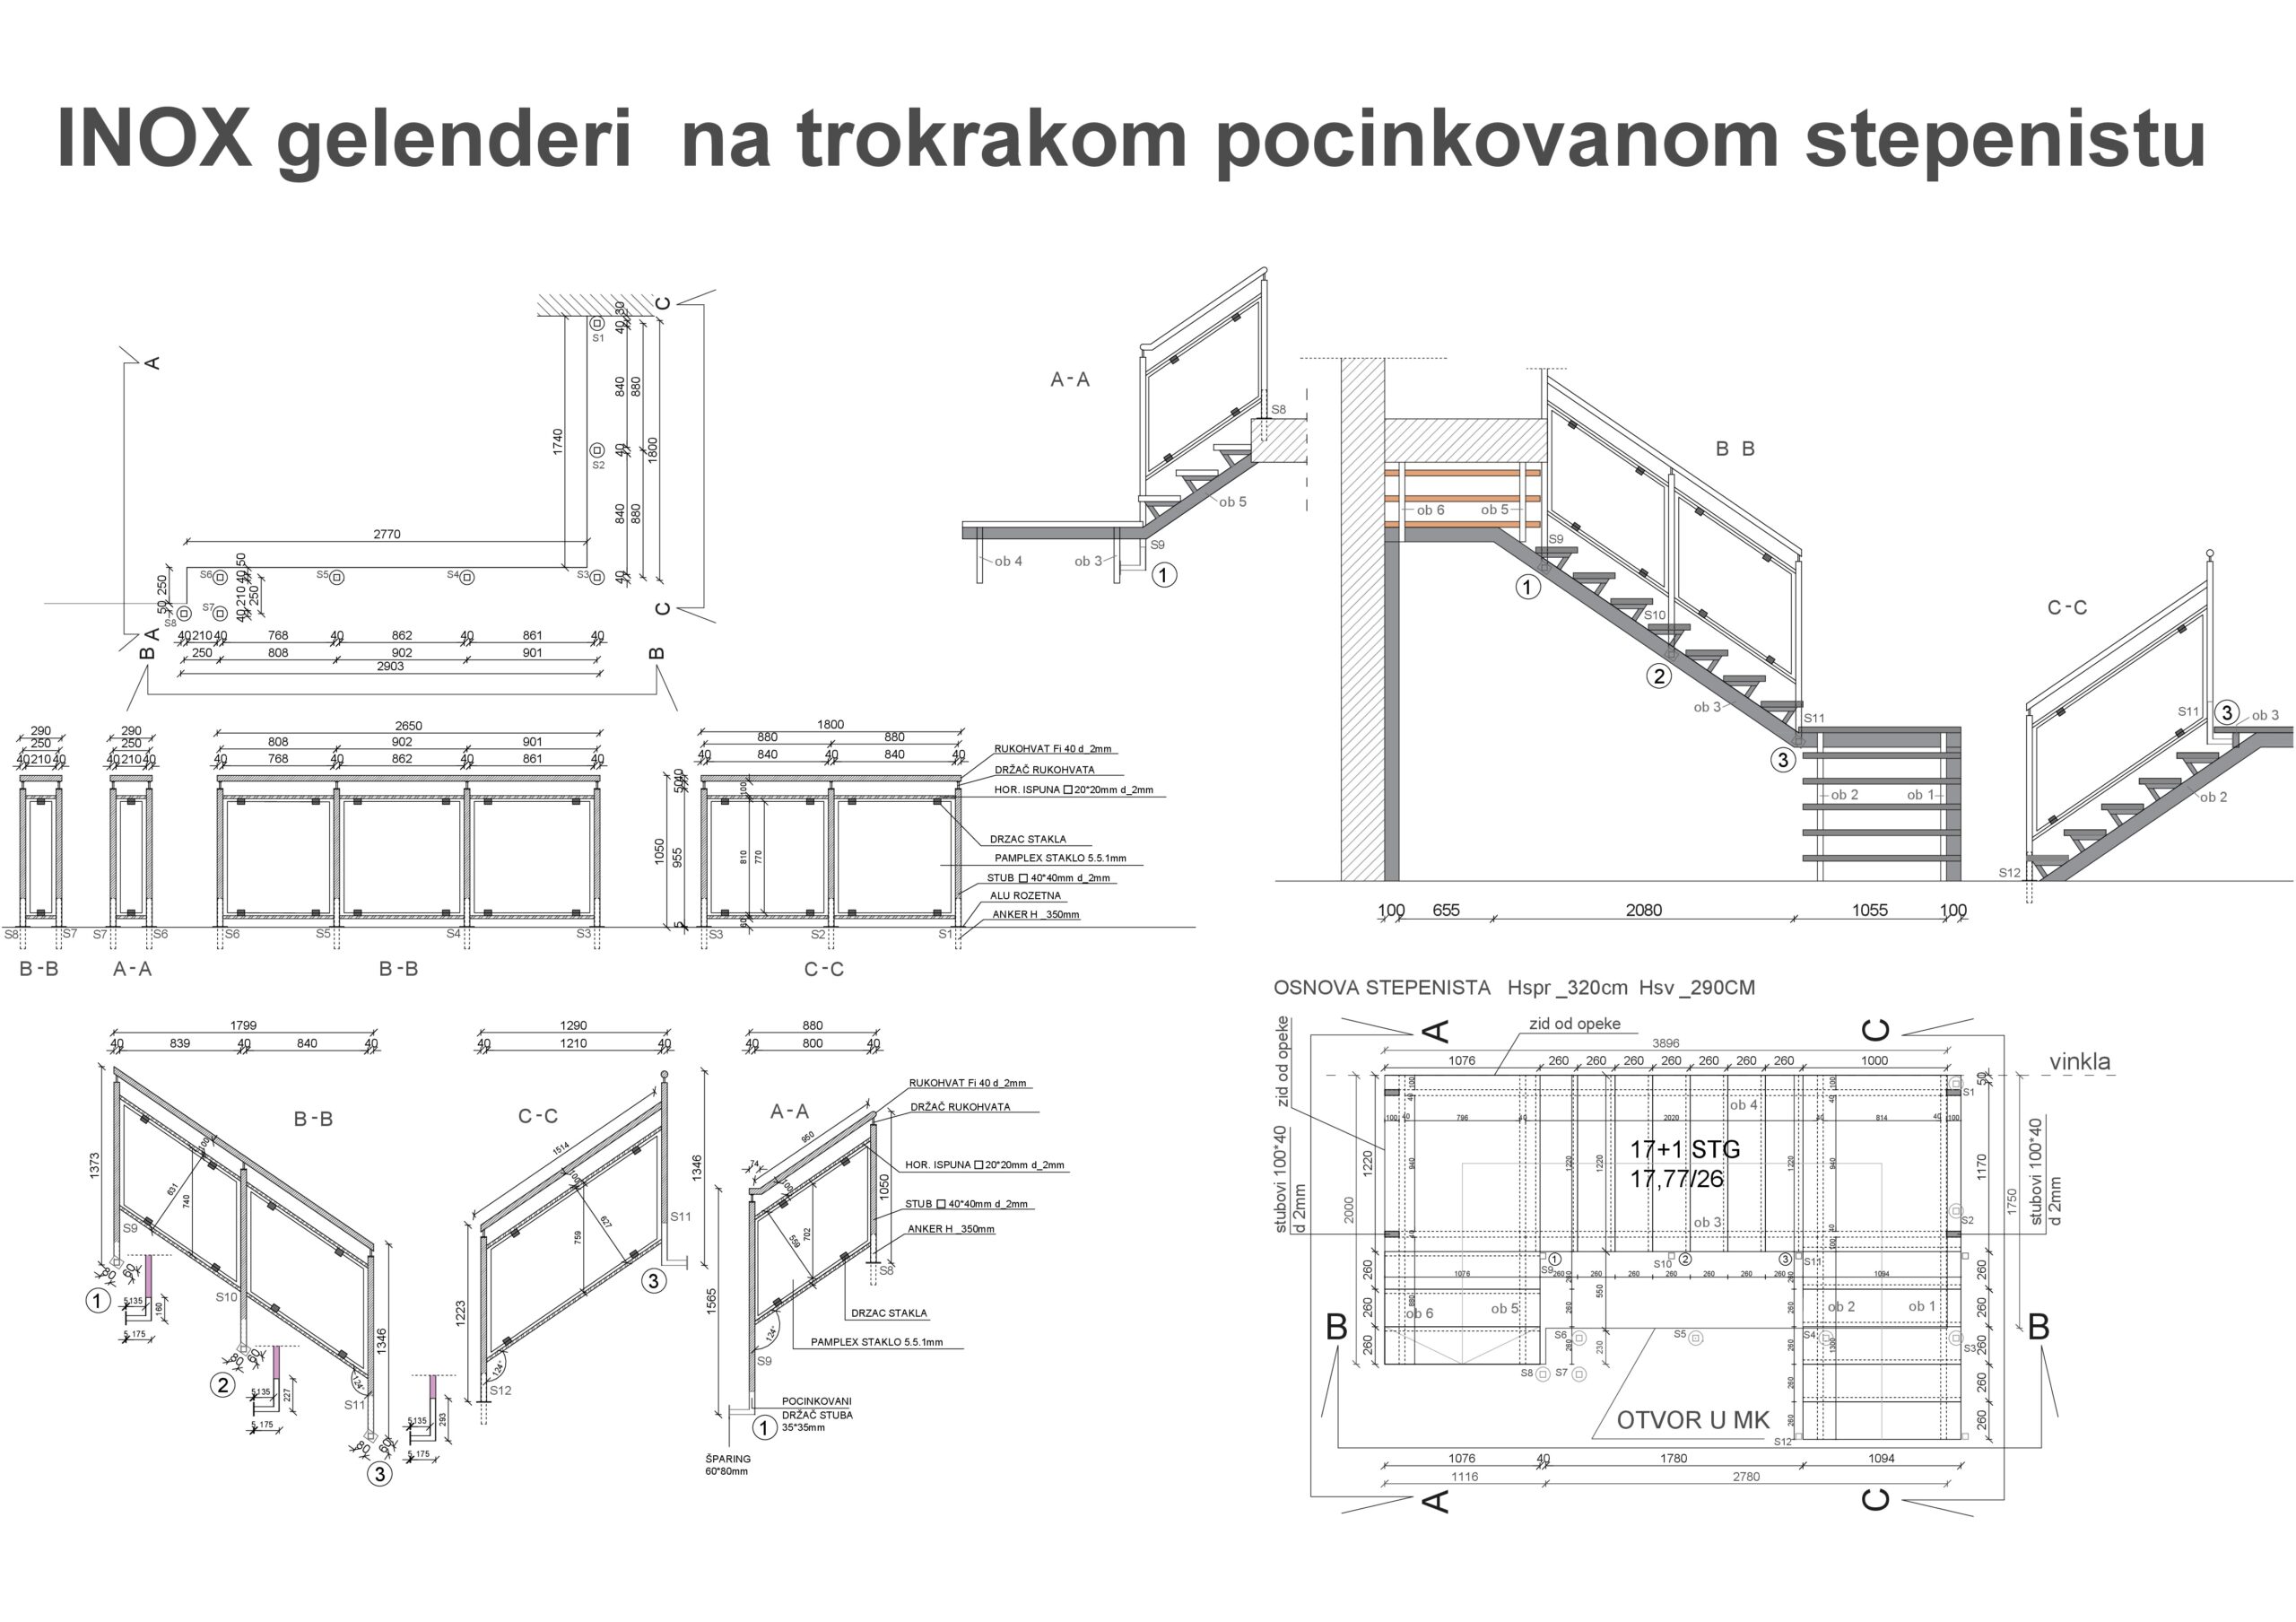 Gelenderi na pocinkovanom stepeništu - tehnički crtež